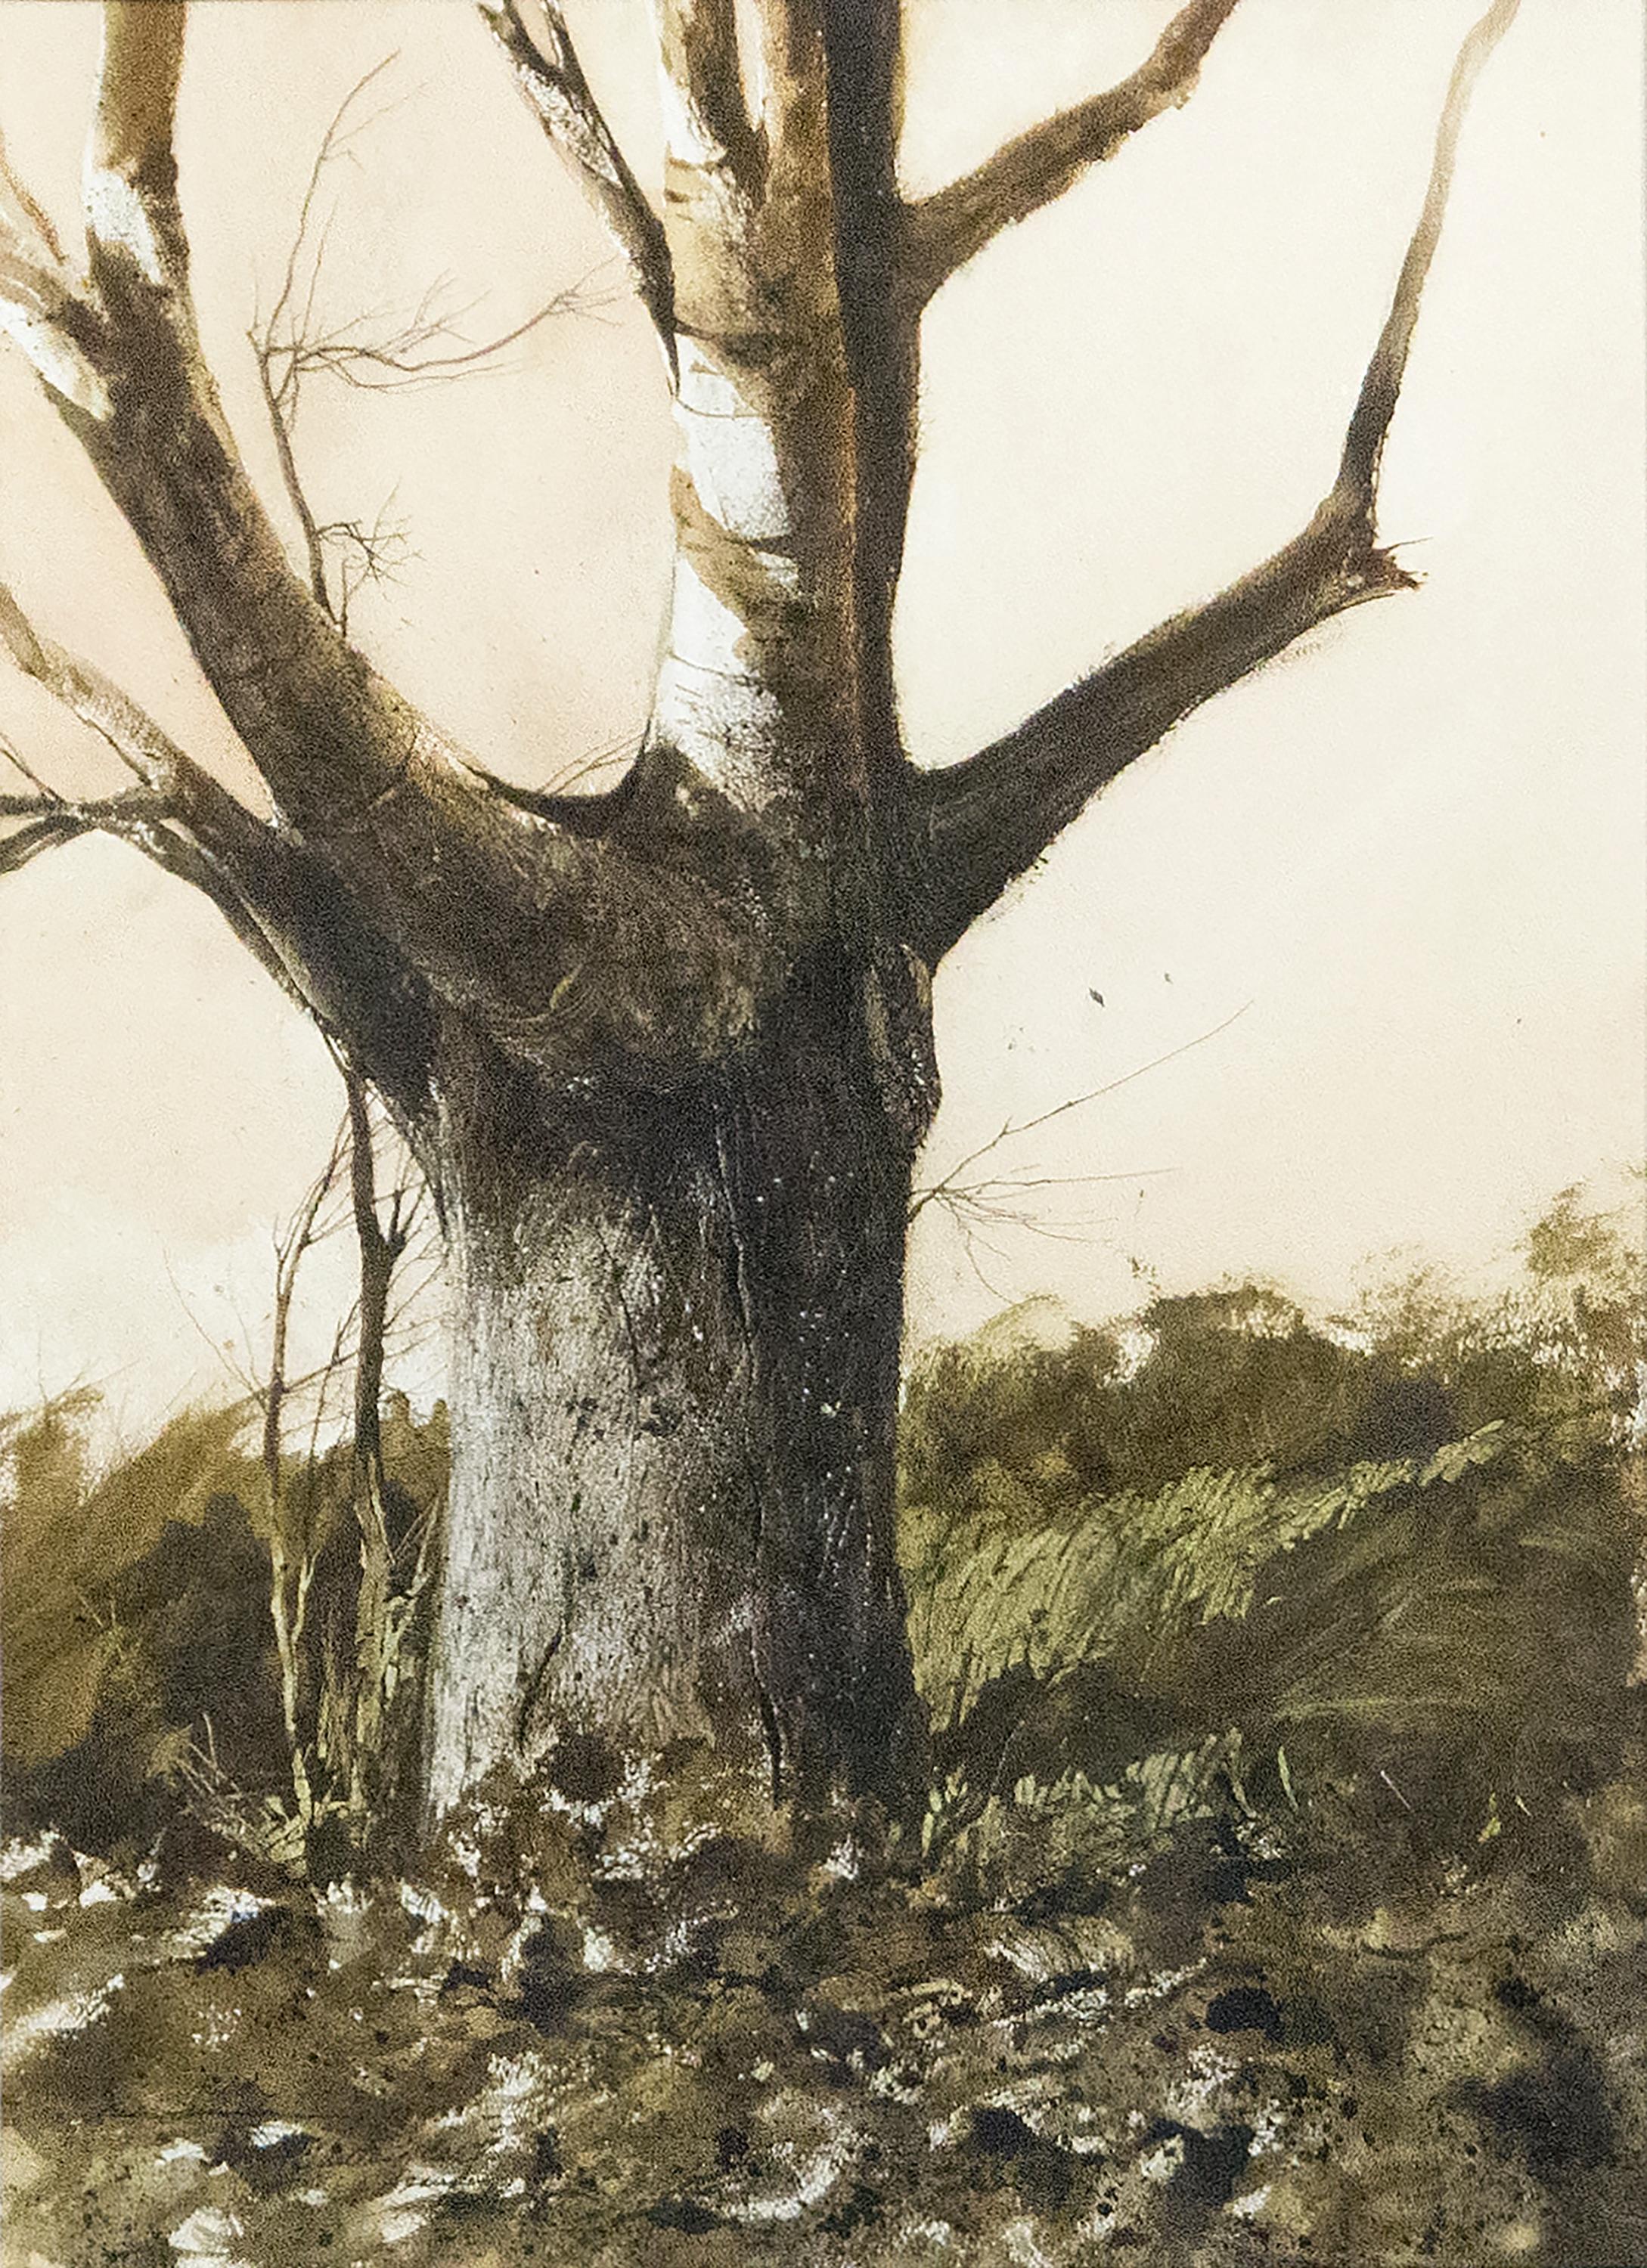 SUMIDA, GREGORY Landscape Painting - Tree Study, Whittier, CA